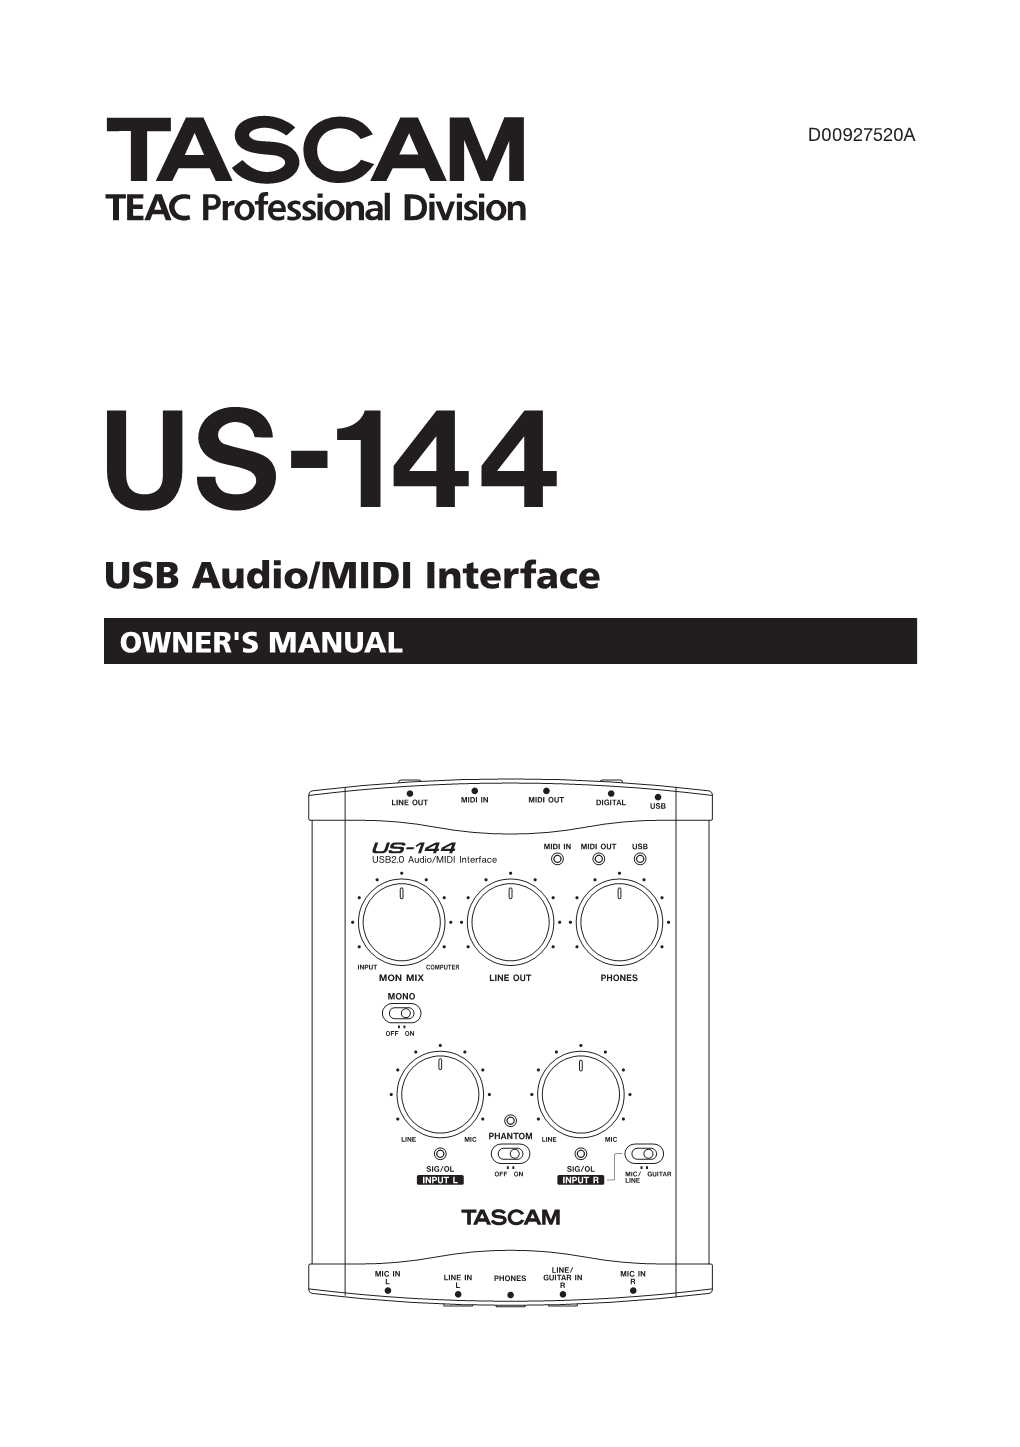 US-144 USB Audio/MIDI Interface